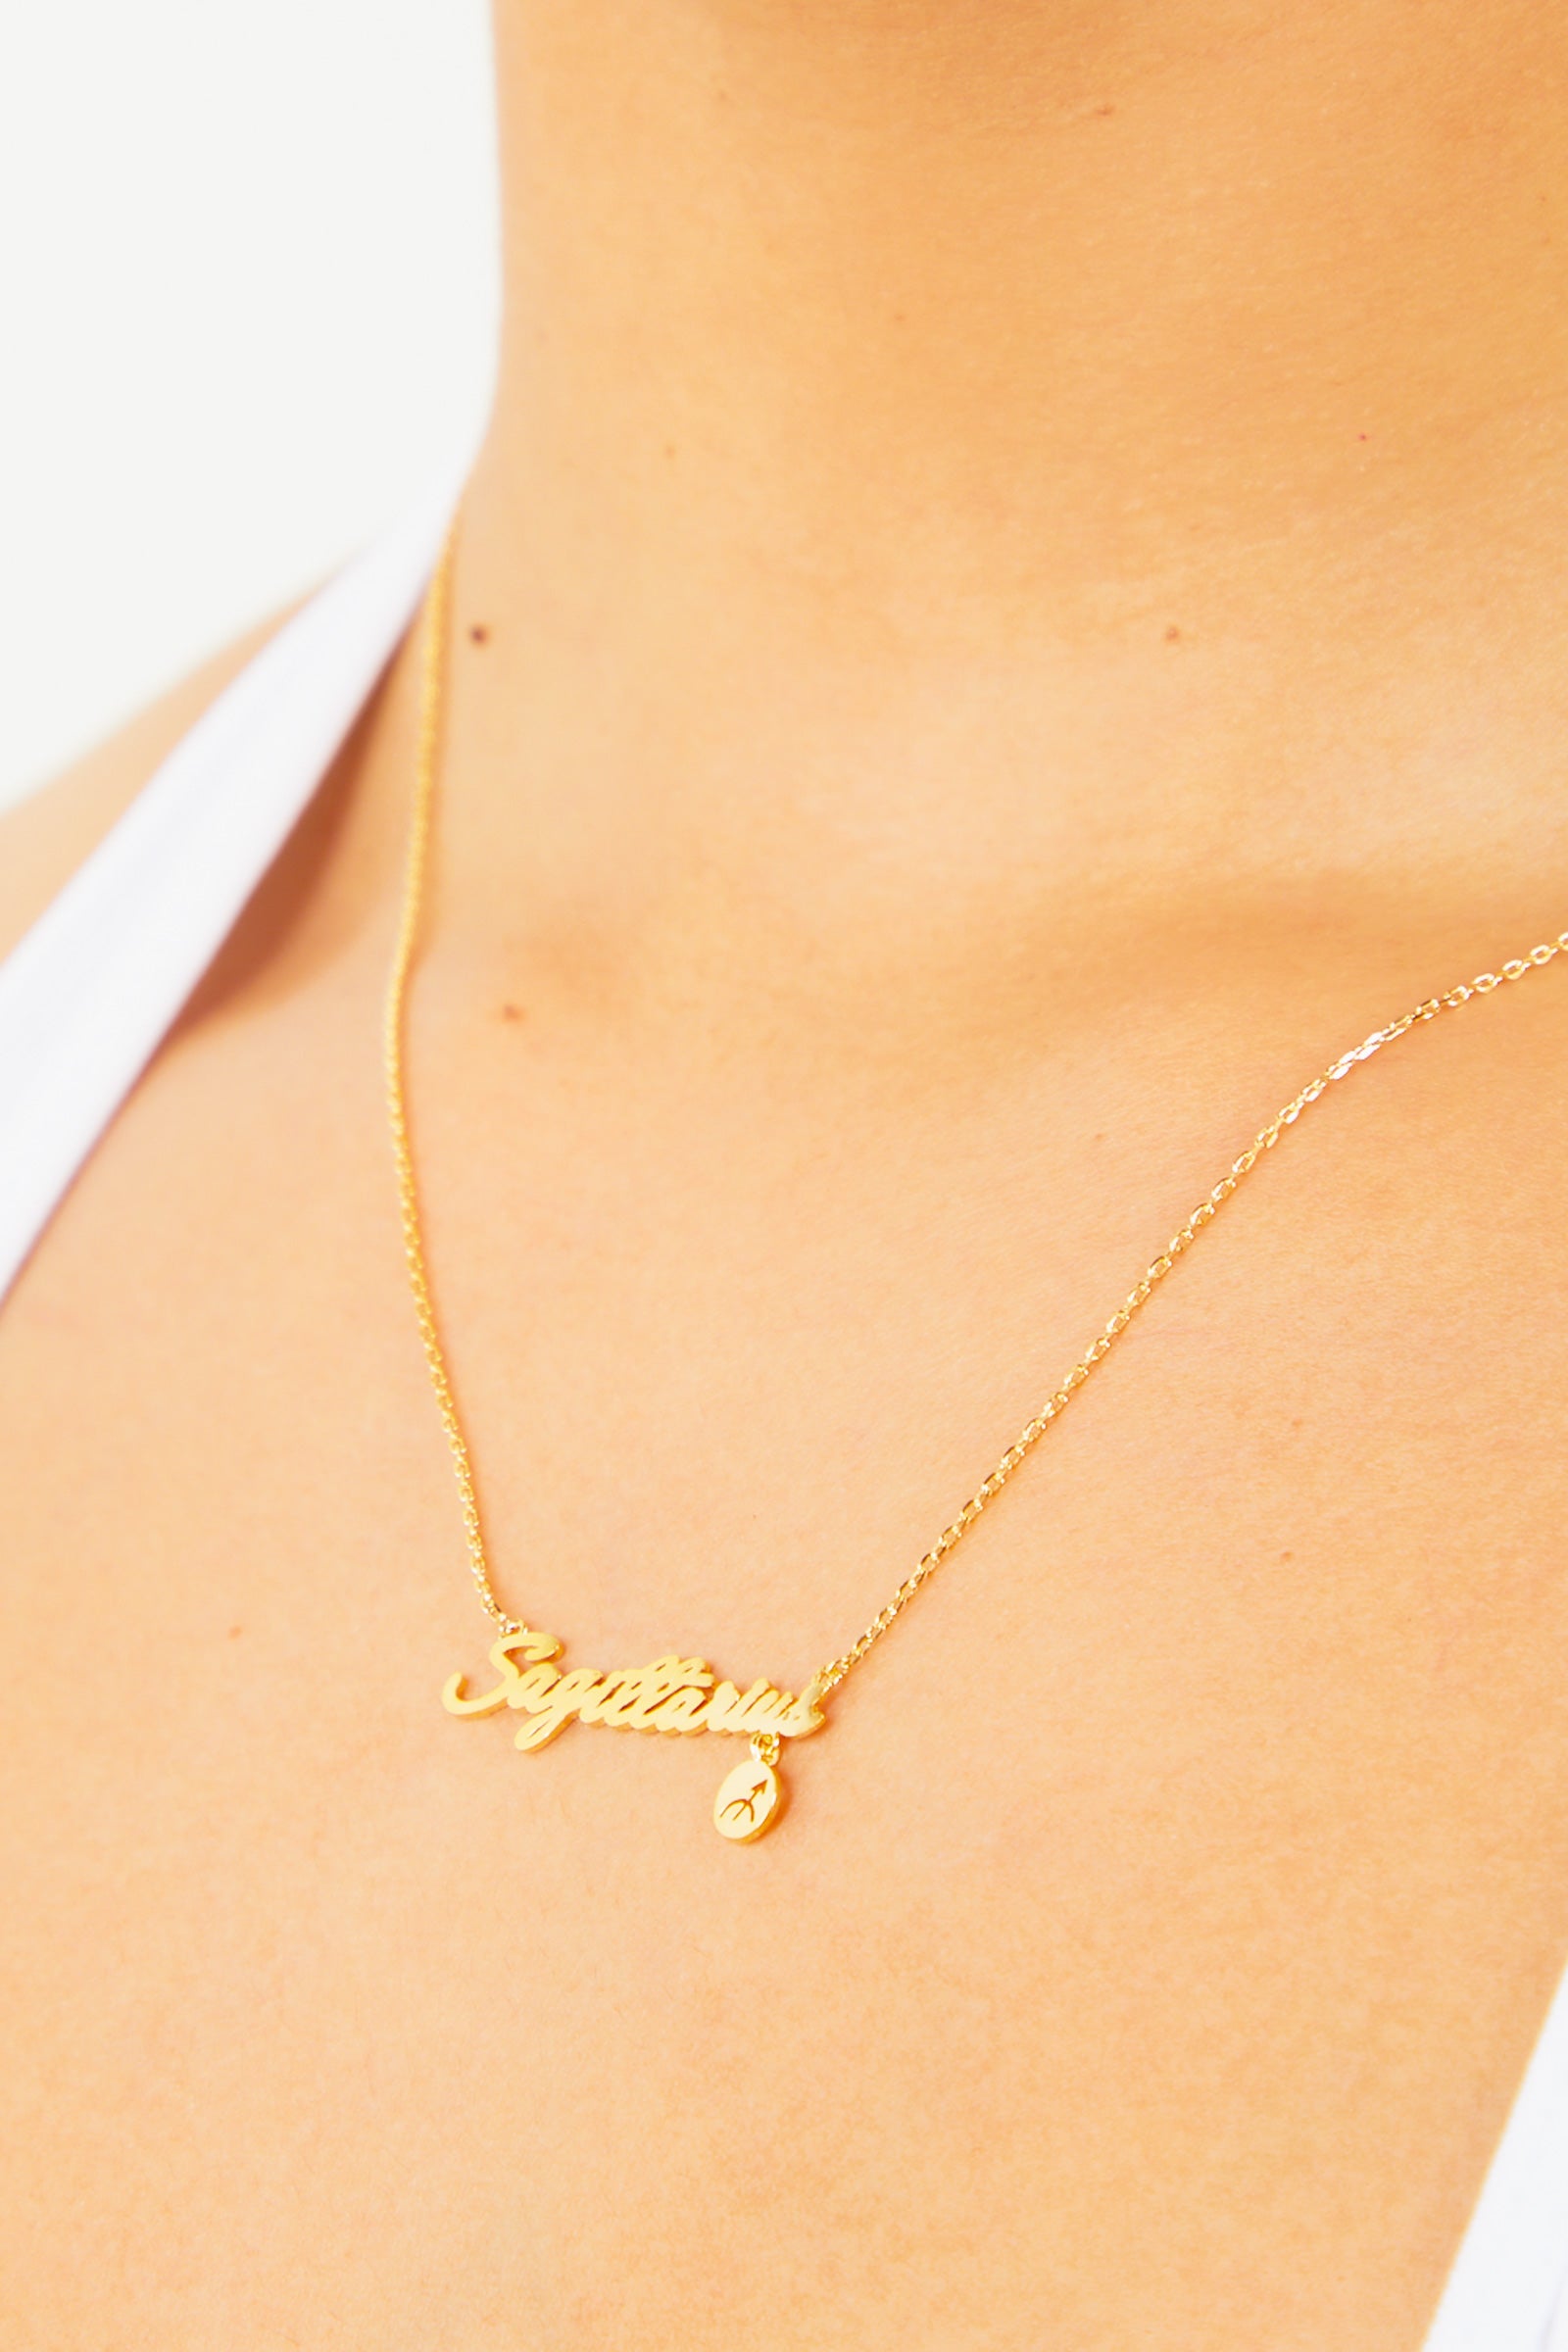 Sagittarius Nameplate Necklace - Gold